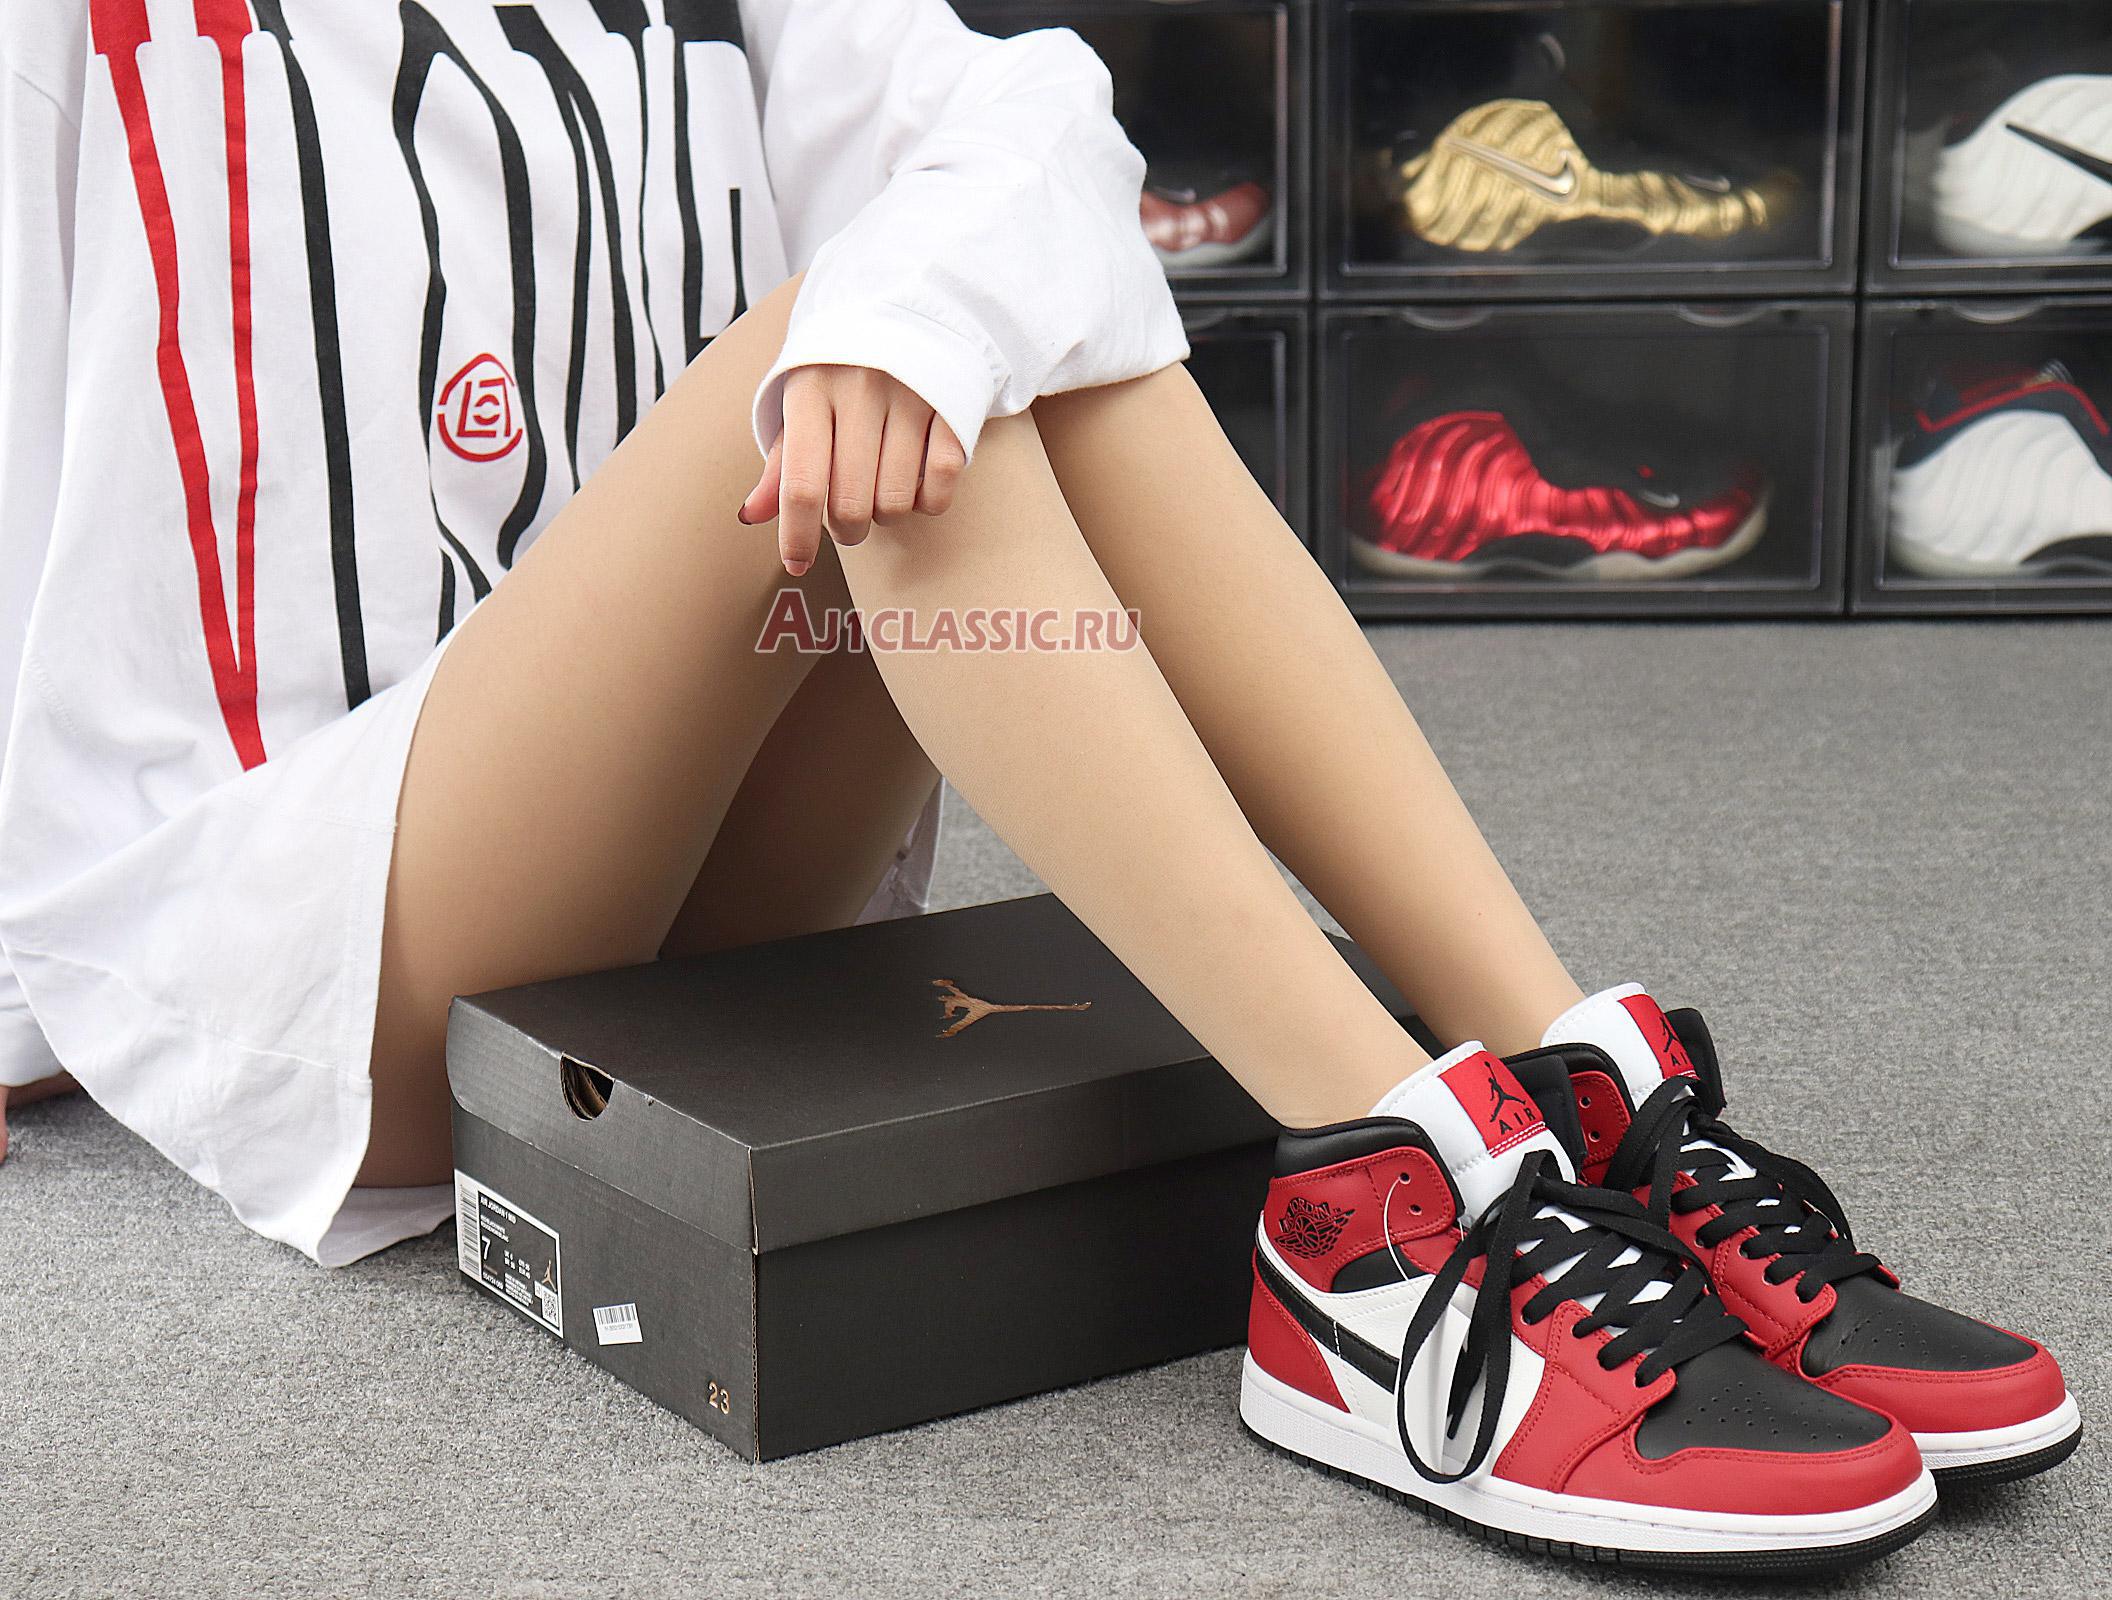 Air Jordan 1 Mid Chicago Black Toe 554724-069 Black/Gym Red/White Sneakers